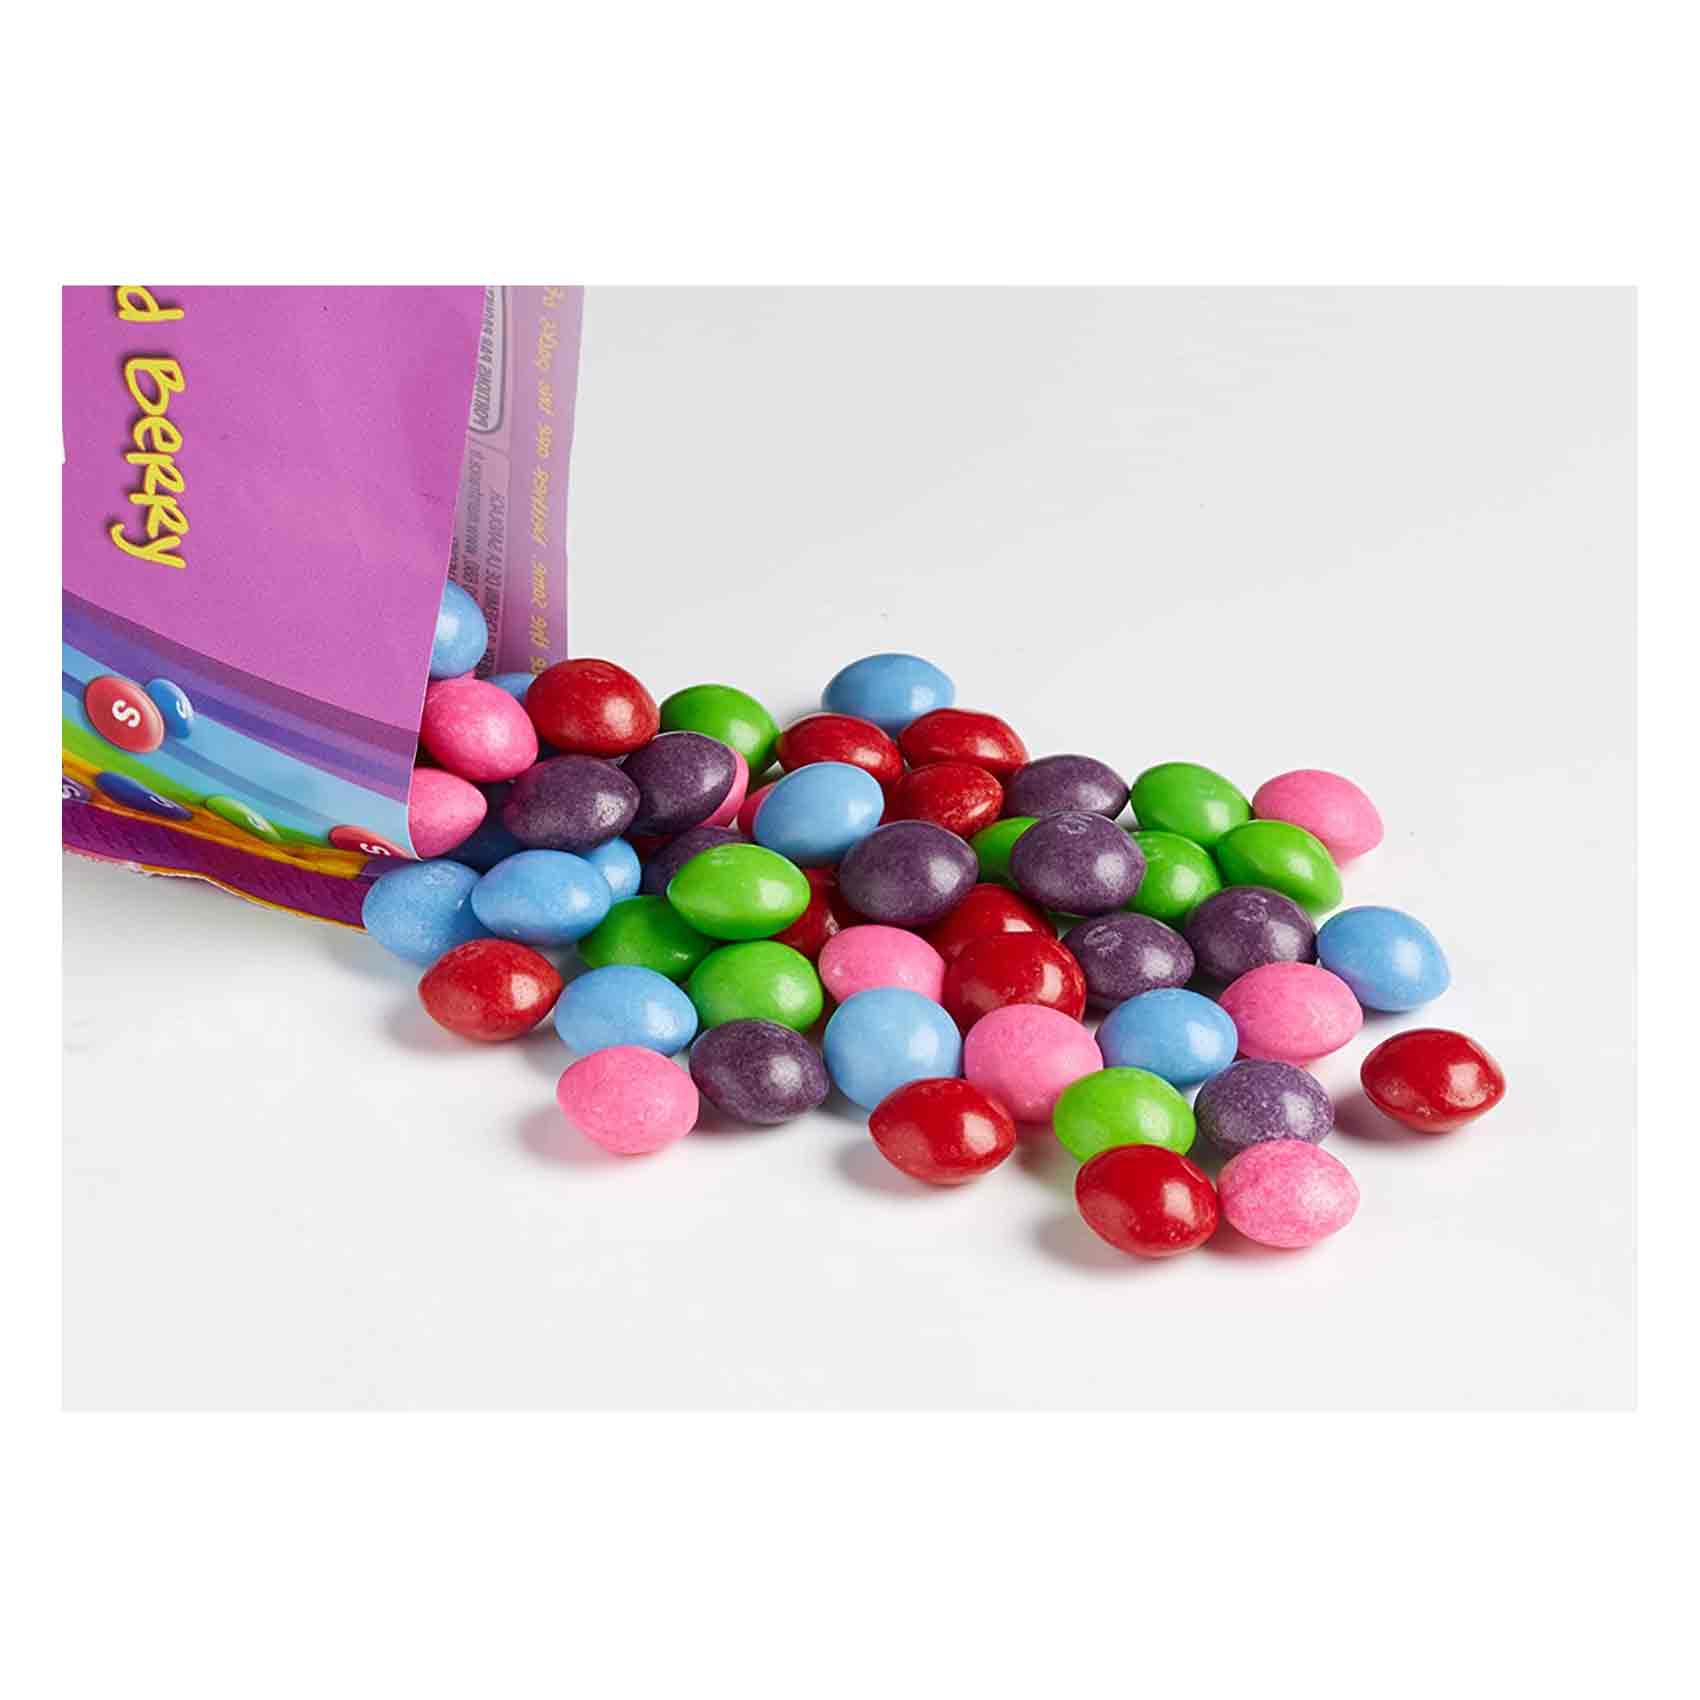 Skittles Wild Berry Candy 174g